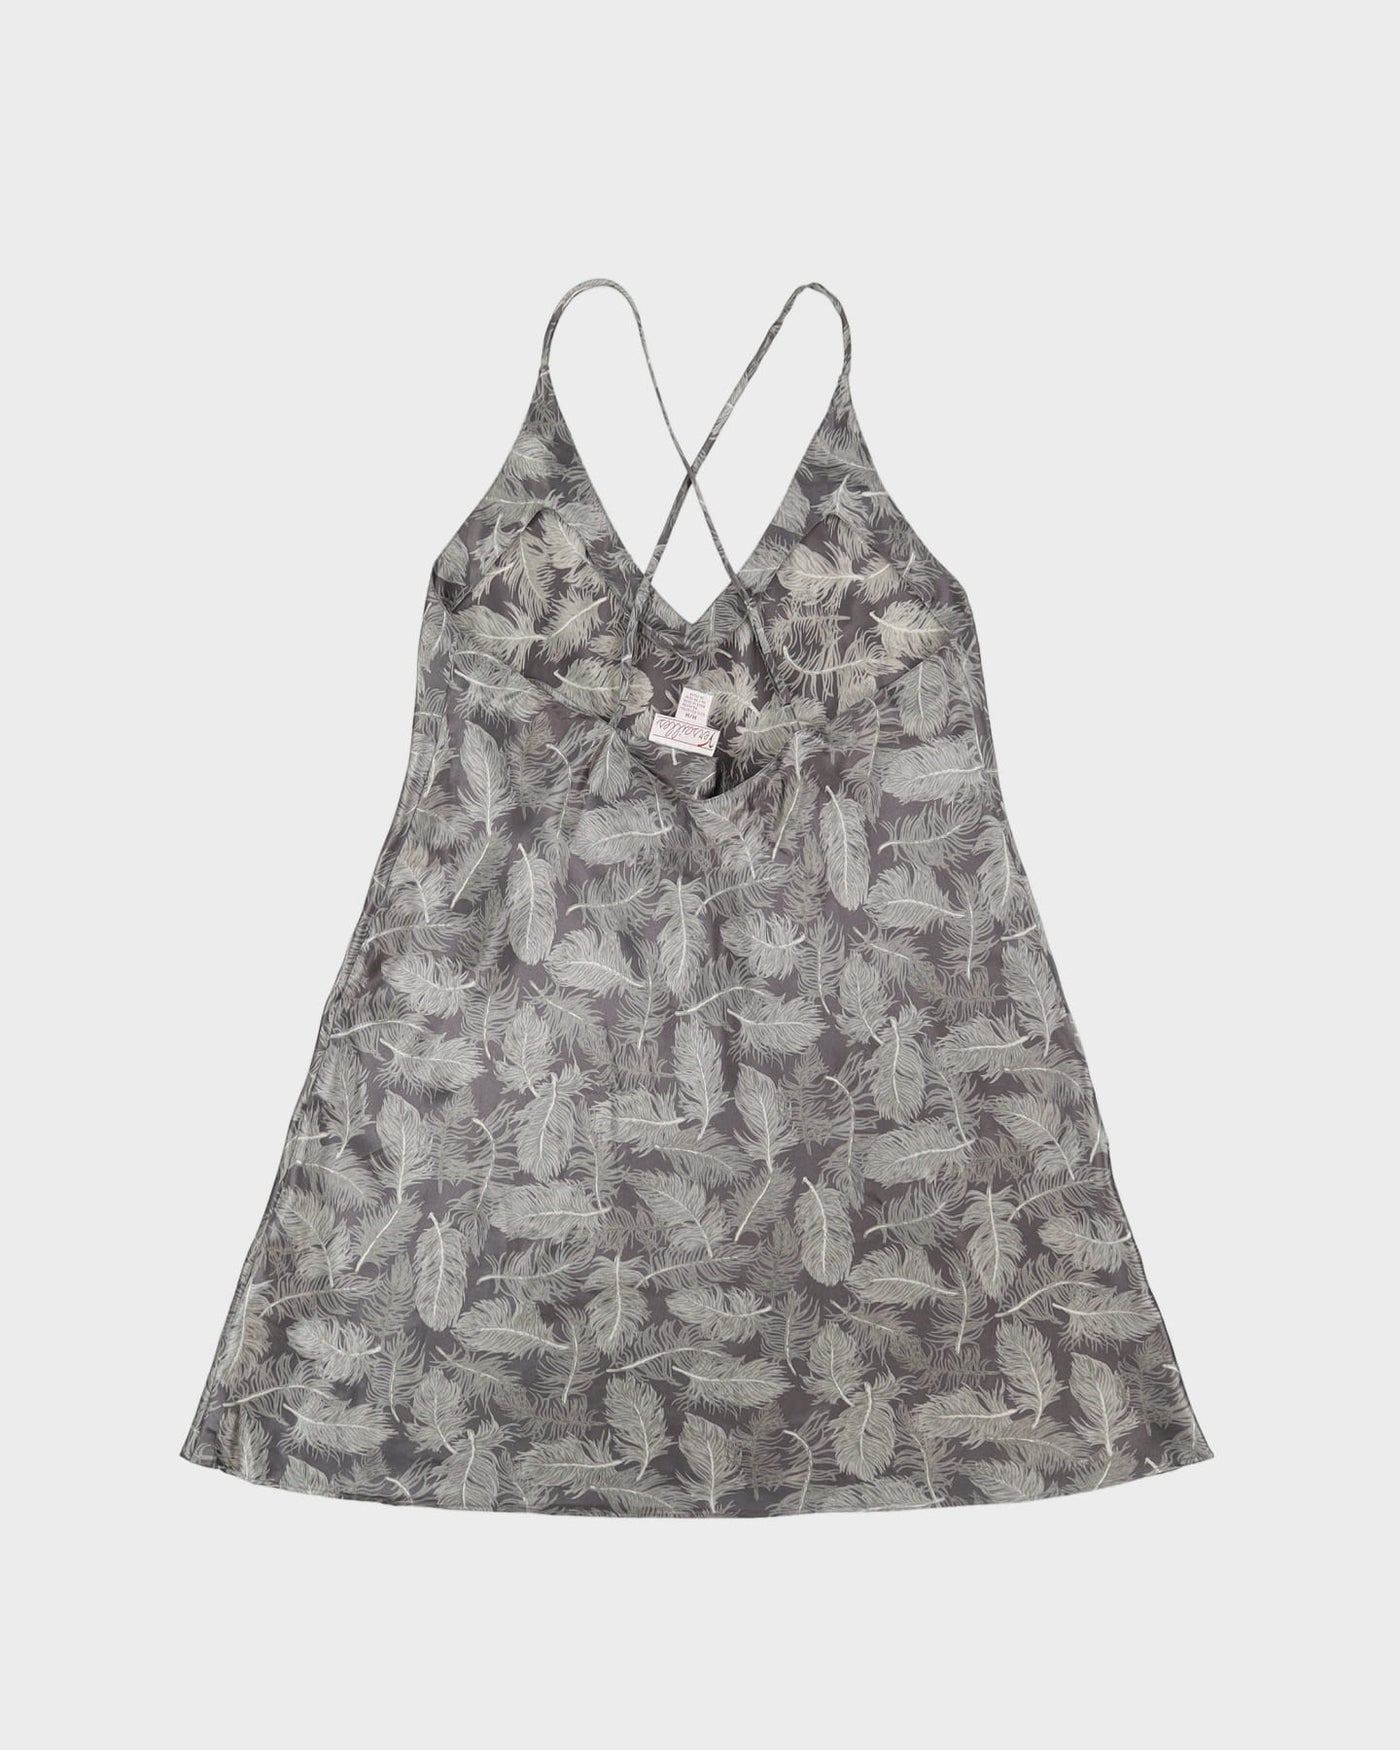 Grey Leaves Patterned Slip Dress - S